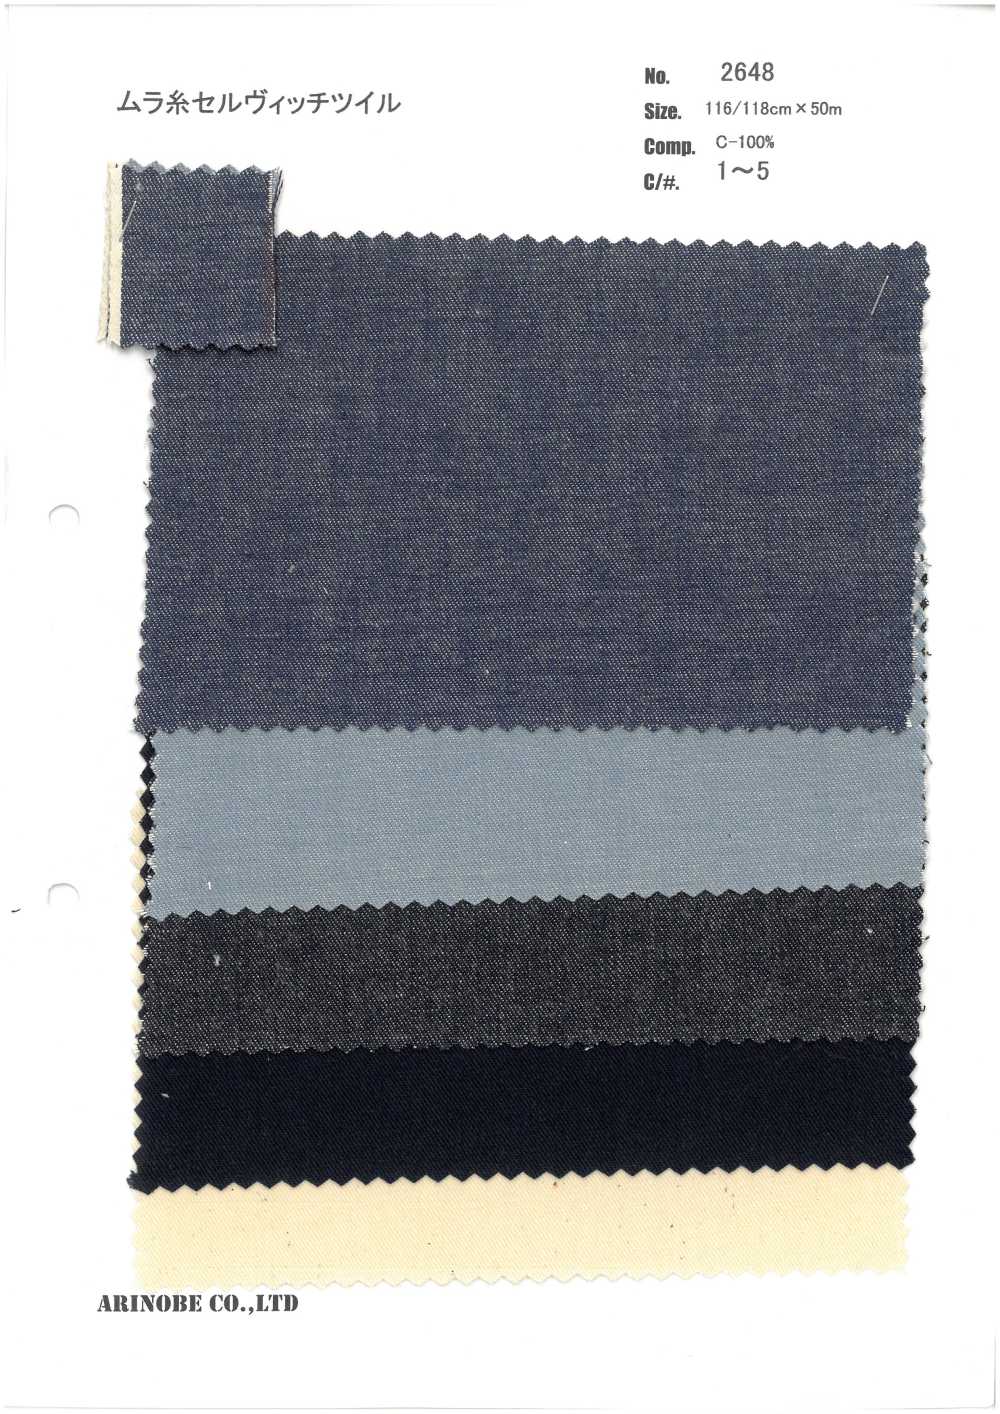 2648 Sarja De Selvage De Linha Desigual[Têxtil / Tecido] ARINOBE CO., LTD.